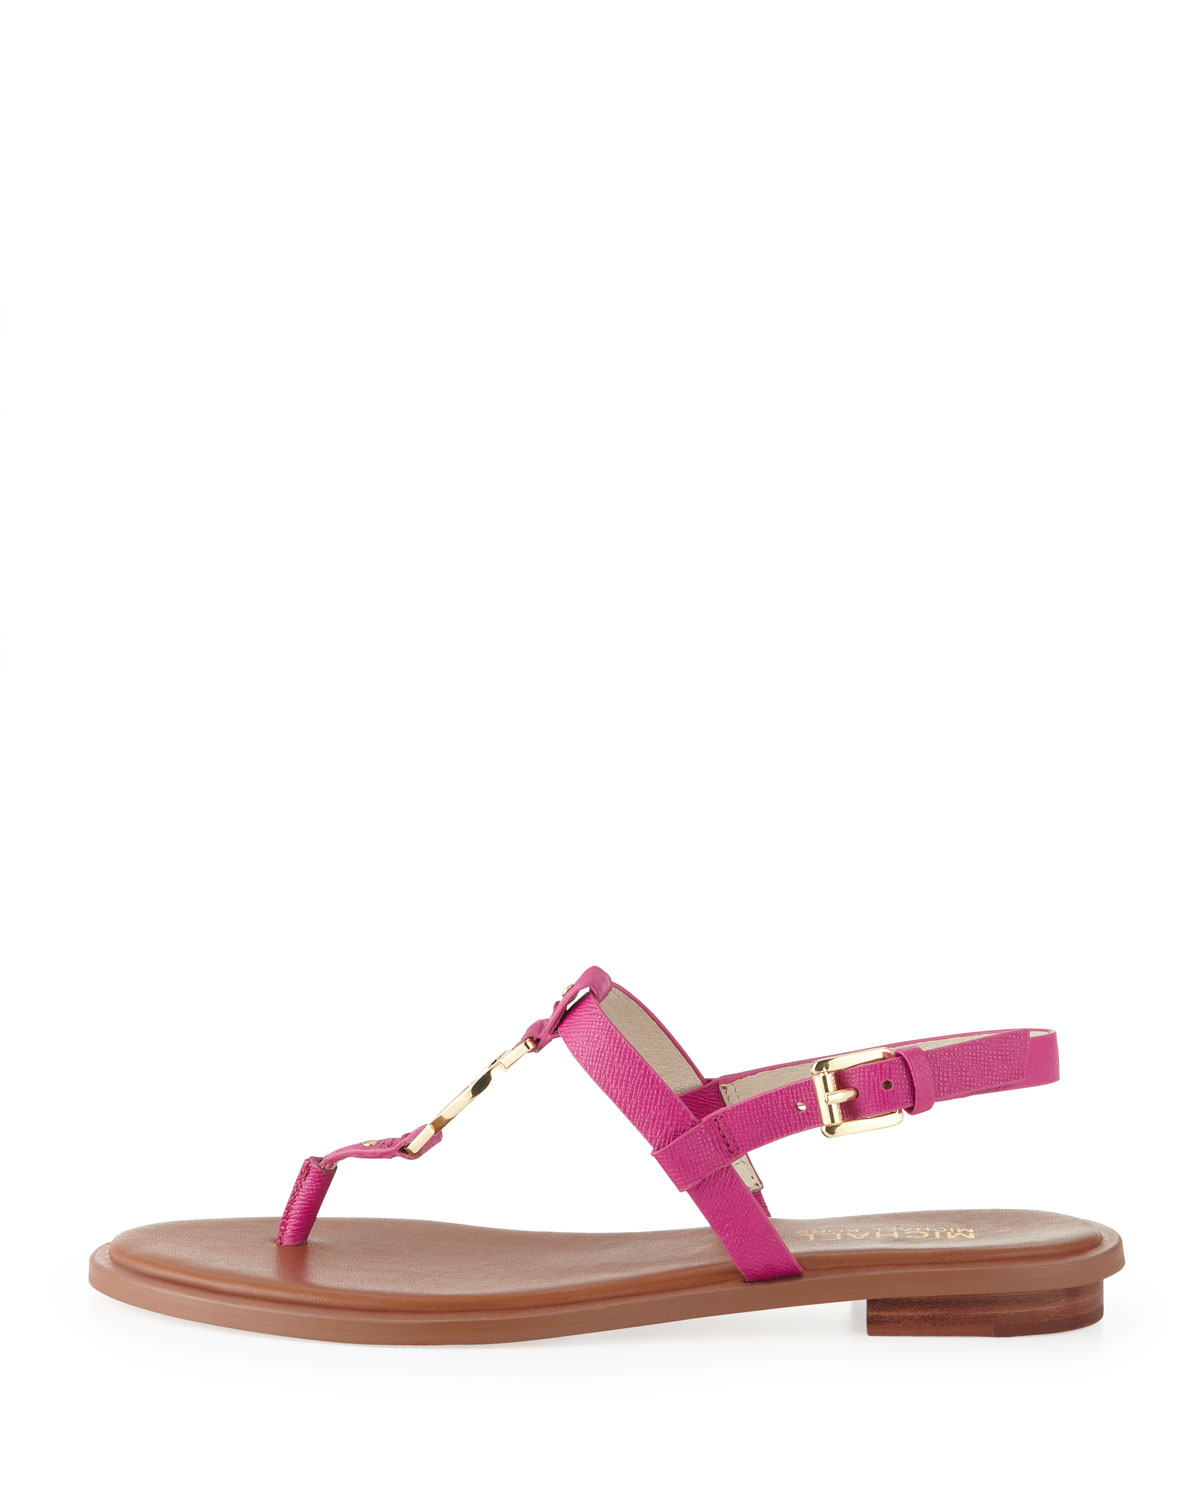 MICHAEL Michael Kors Sondra Logo Sandal in Fuschia (Pink) - Lyst